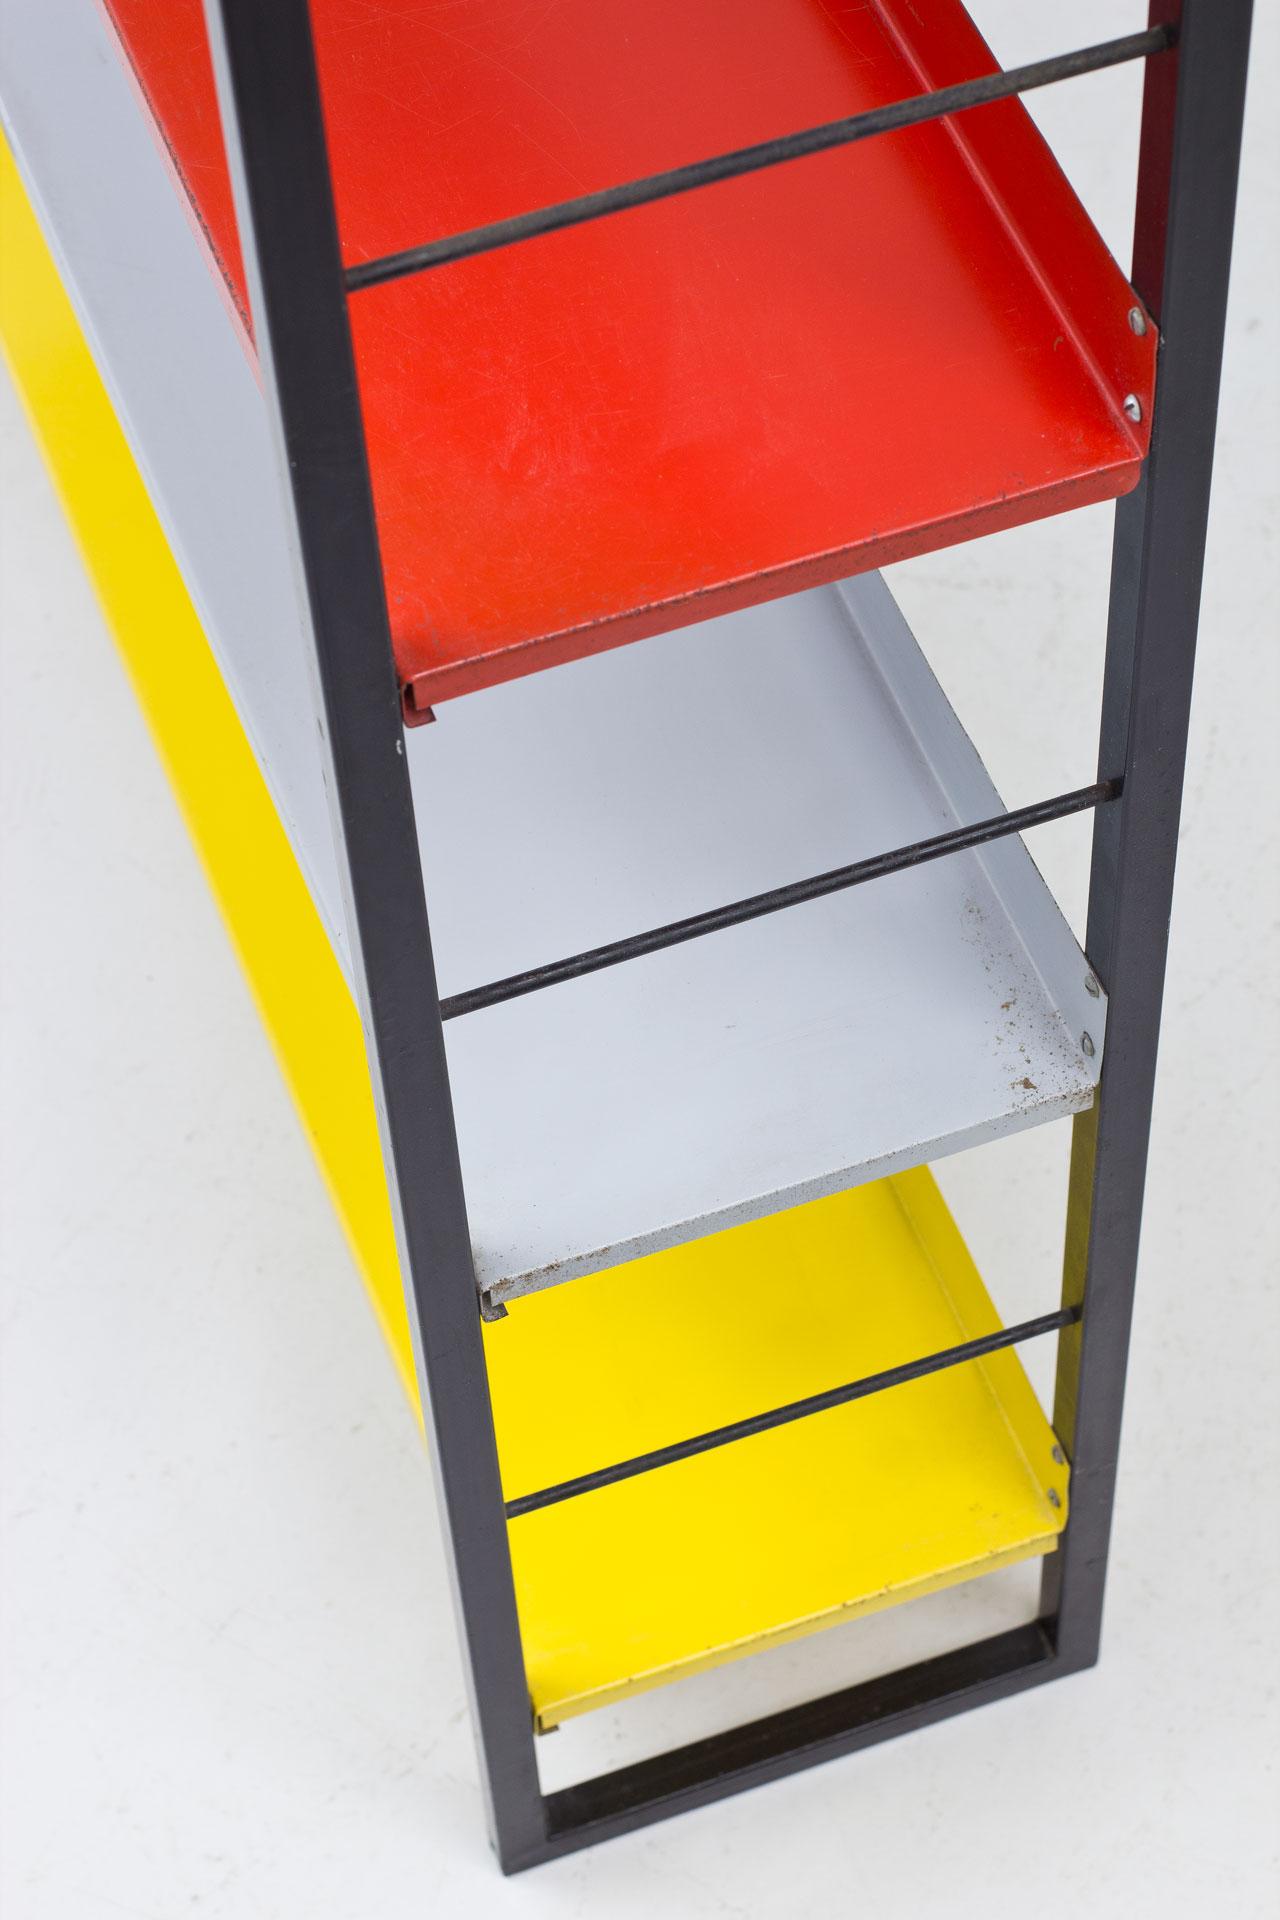 20th Century Freestanding Metal Shelf System by A. Dekker for Tomado, Netherlands, 1950s